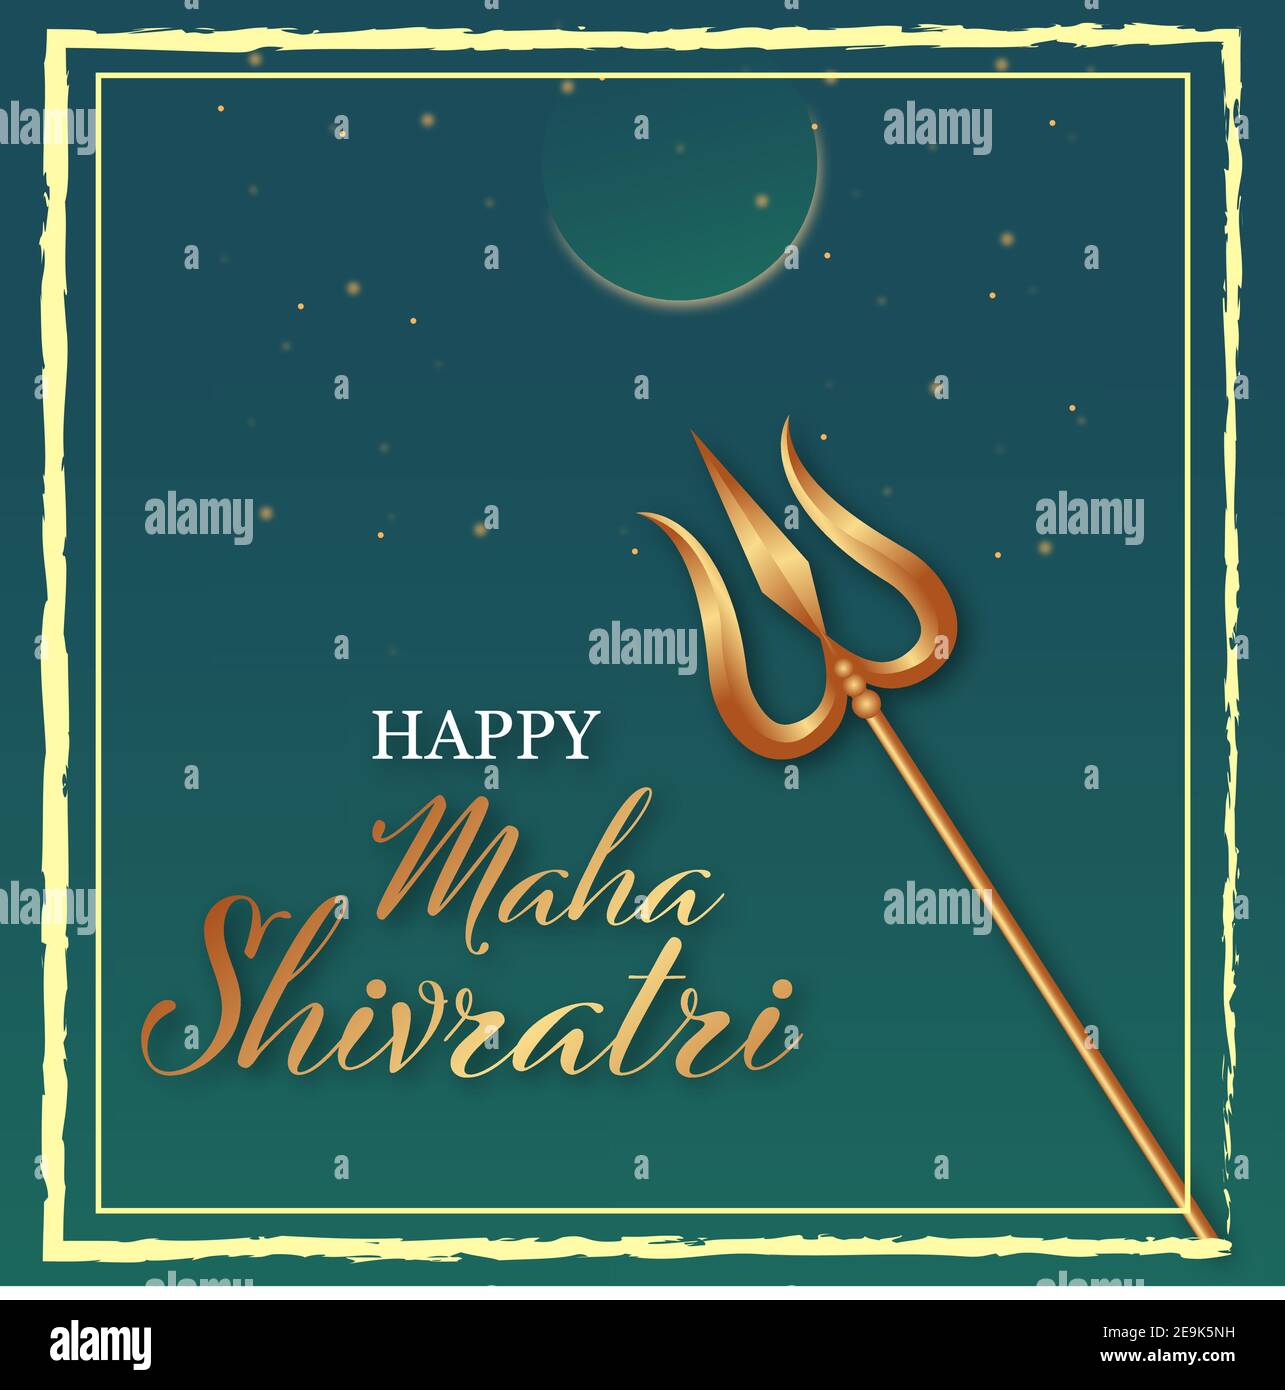 Illustration Of Happy Maha Shivratri. Greeting Card Design. Vector illustration. Stock Vector